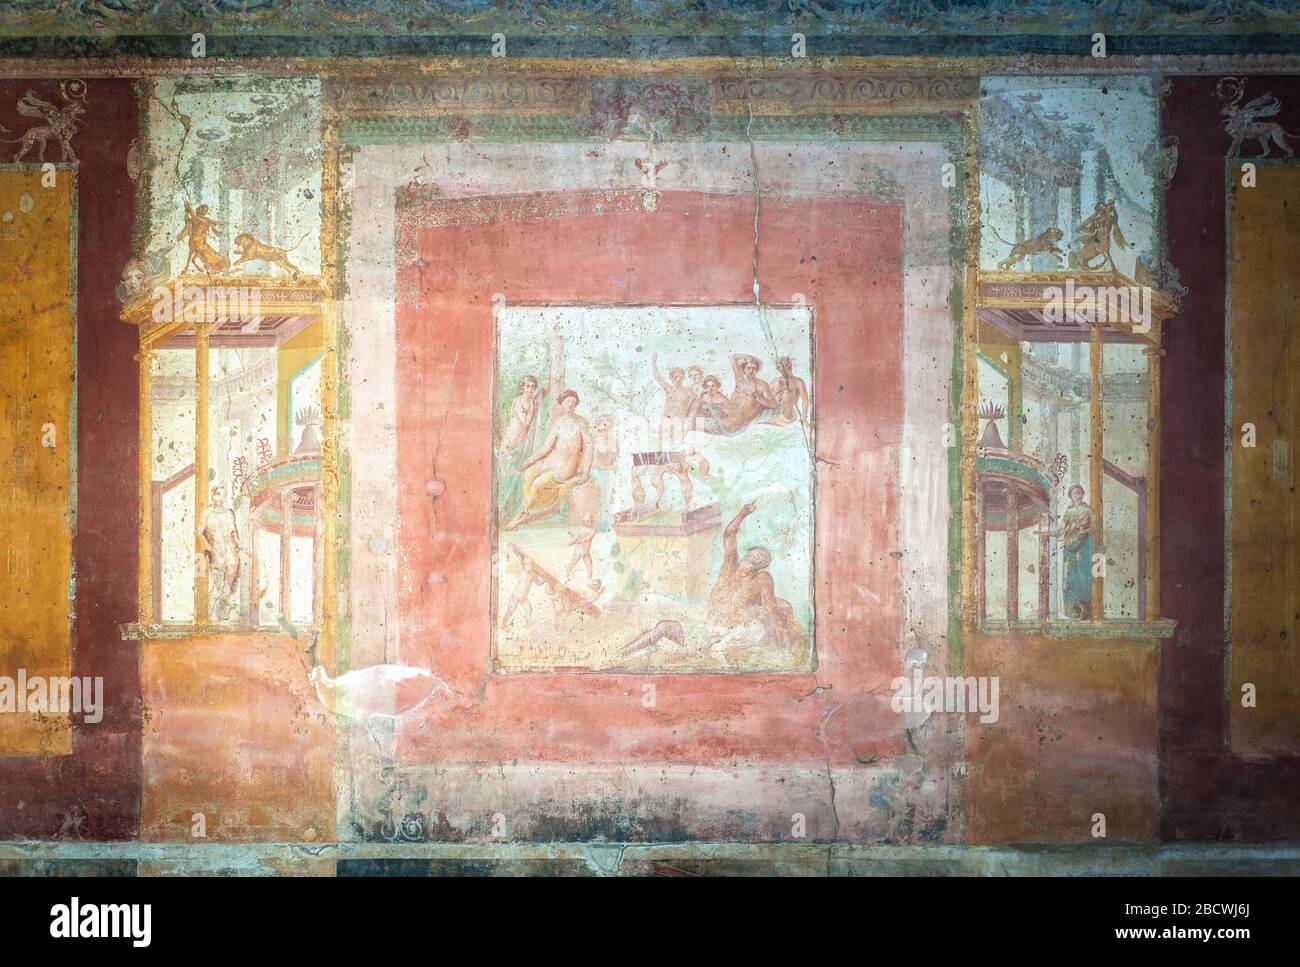 Ancient fresco in the Macellum of Pompeii, Italy Stock Photo